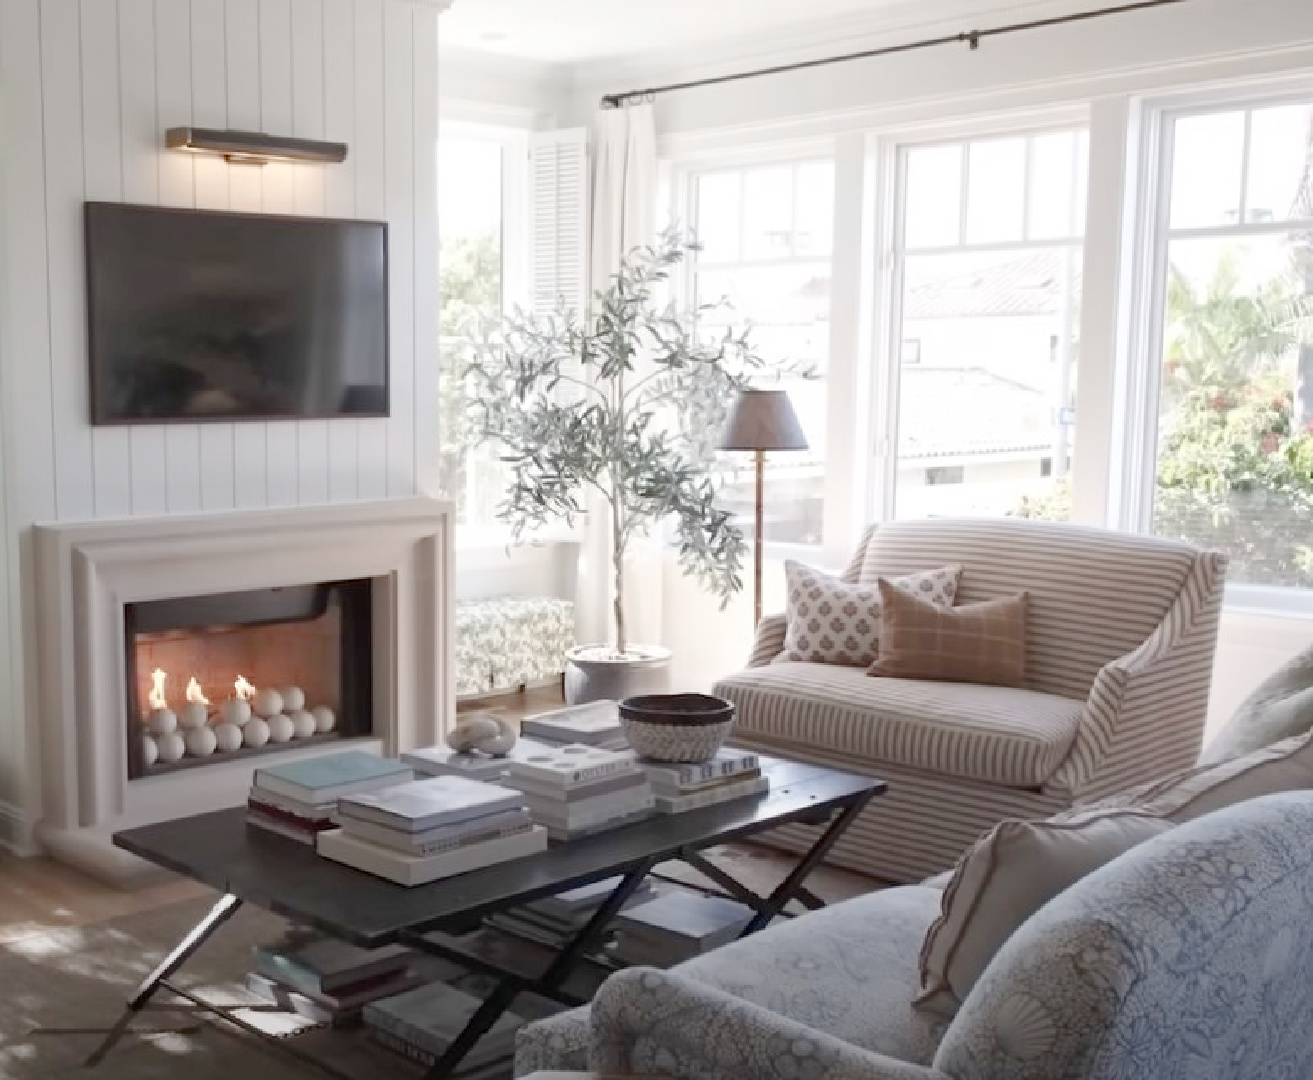 La Jolla beach cottage living room by Leslie Martin of M+M Interior Design. #fermoie